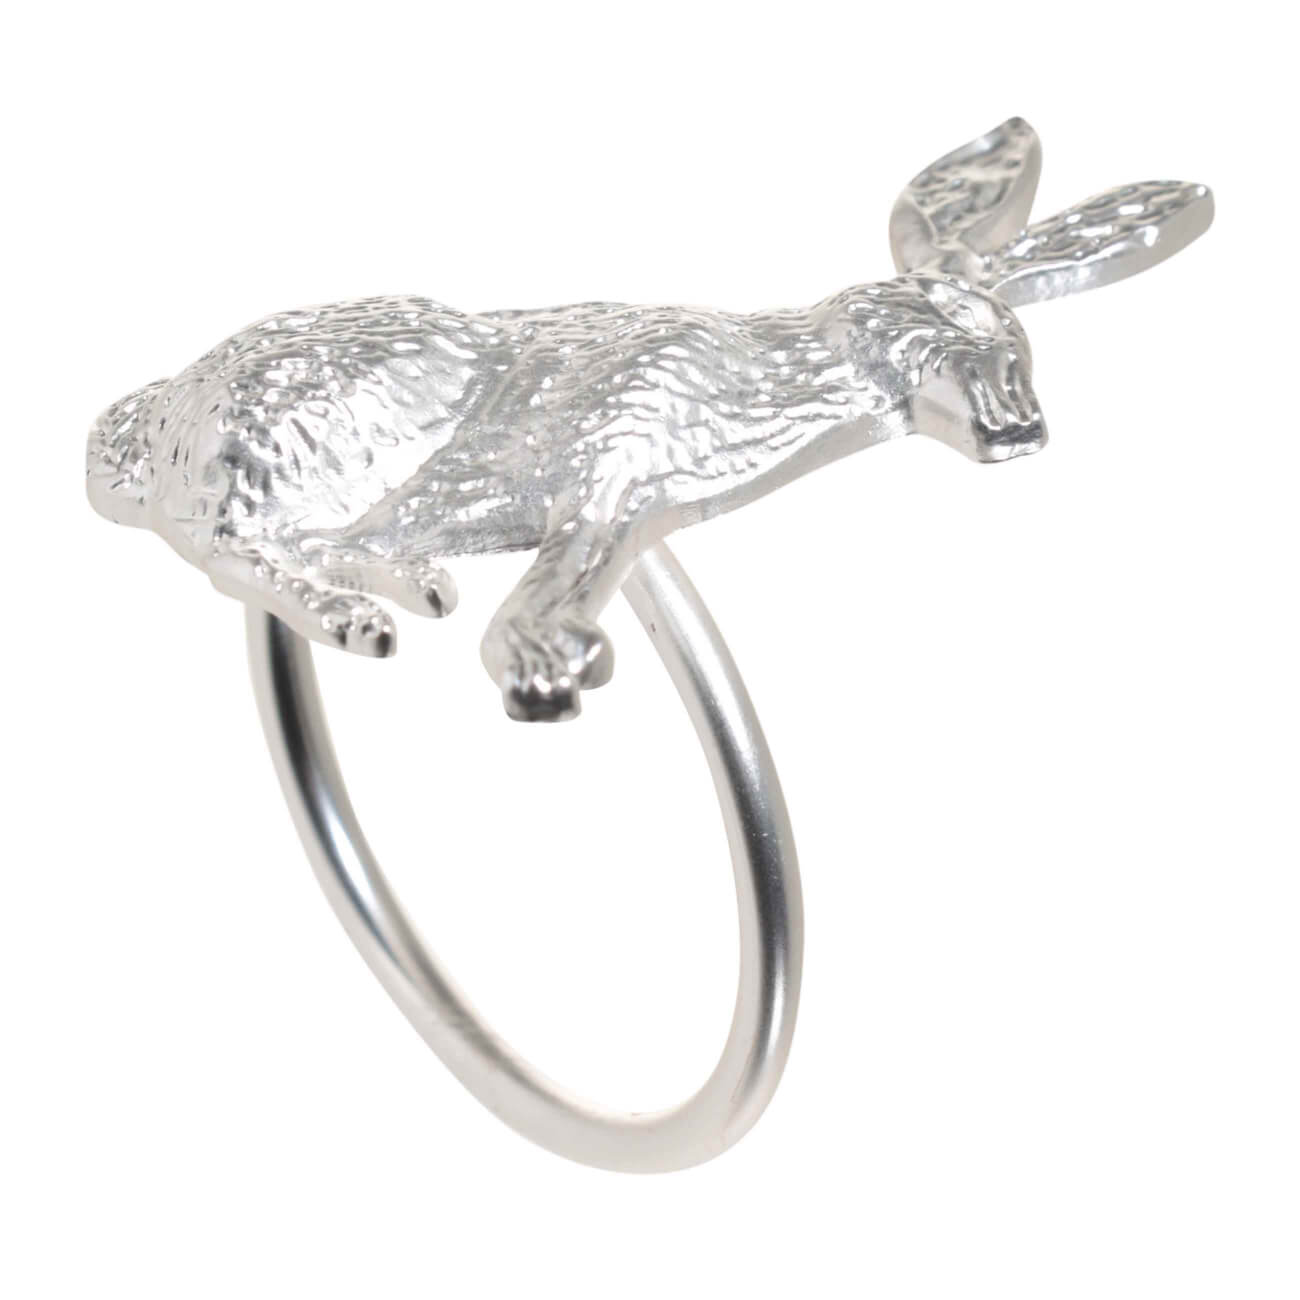 Кольцо для салфеток, 5 см, металл, серебристое, Кролик, Pure Easter кольцо для карниза d 28 33 мм 10 шт серебряный